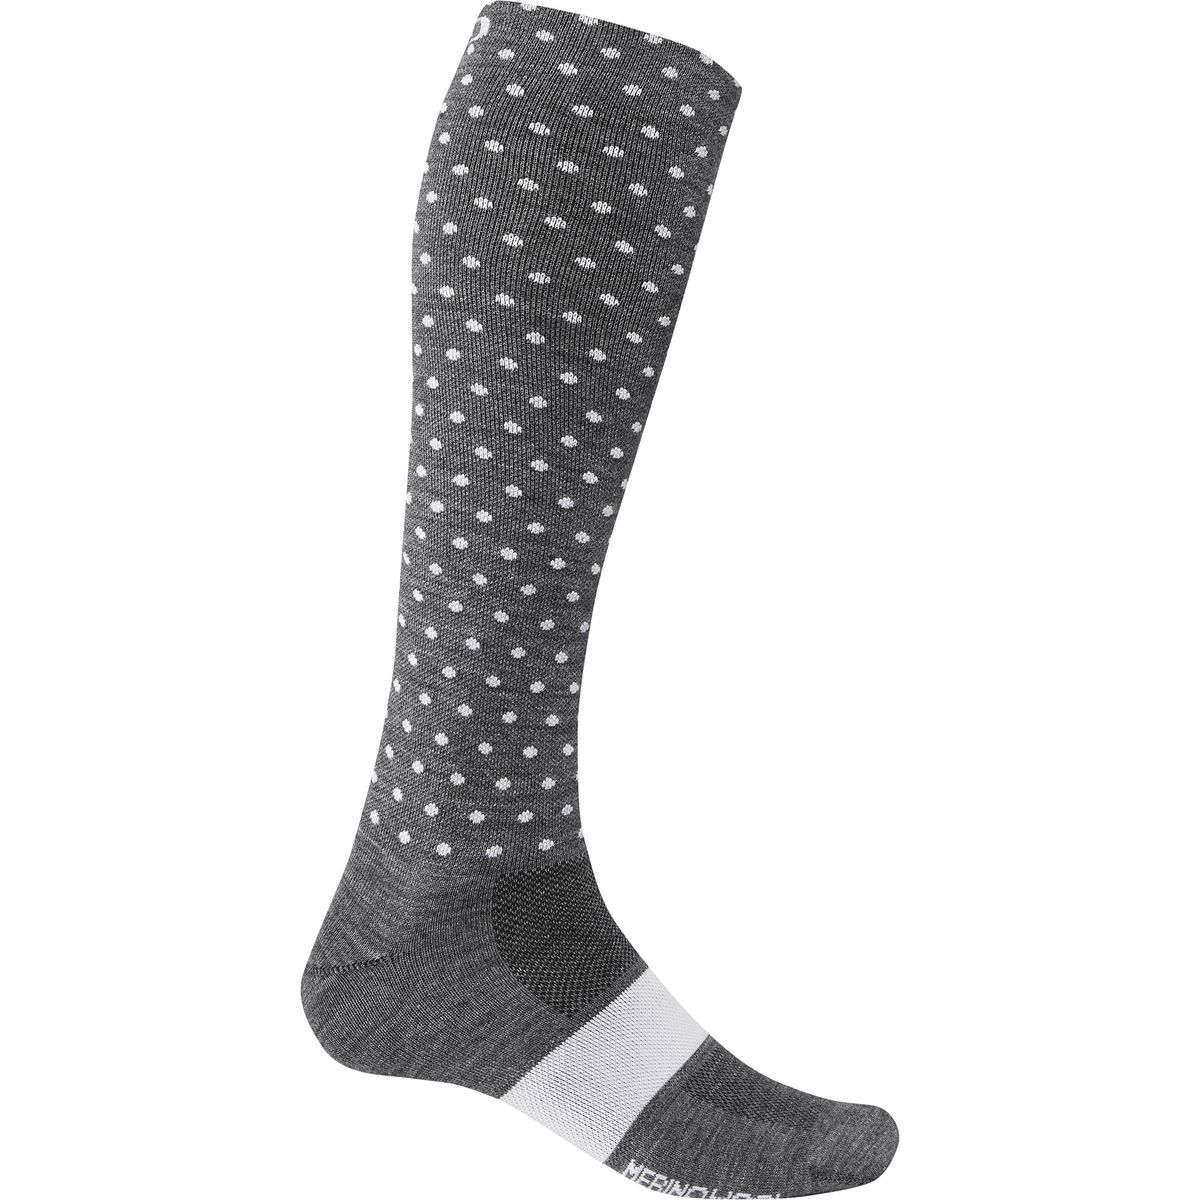 New Road Merino Seasonal Wool Socks